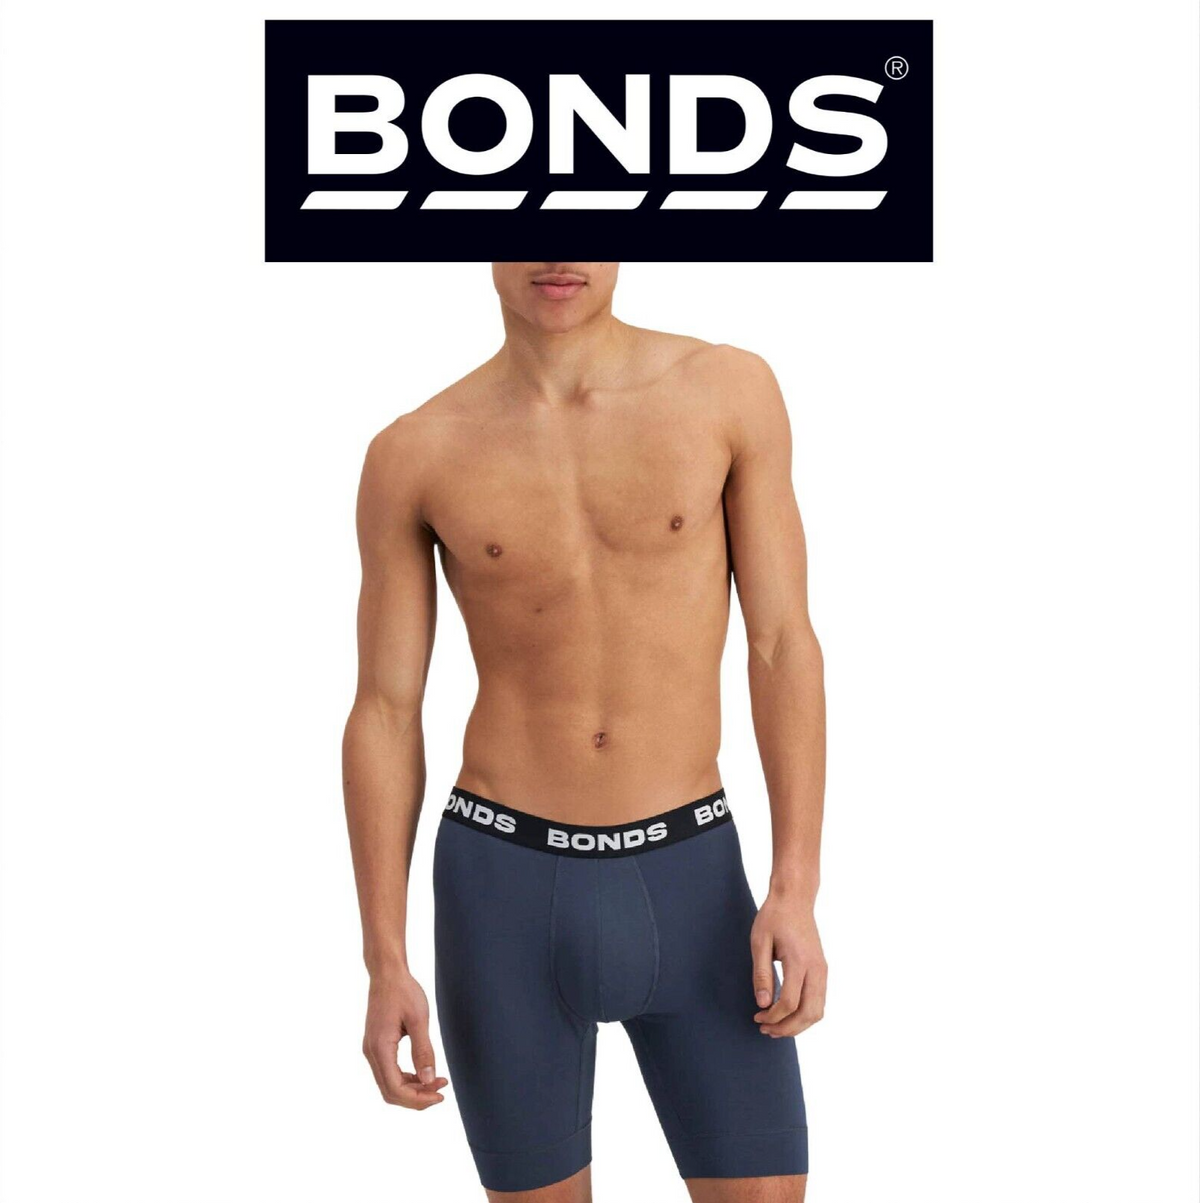 Bonds Mens Total Package Long Trunk Superior Support & Super Comfort Bands MWHK